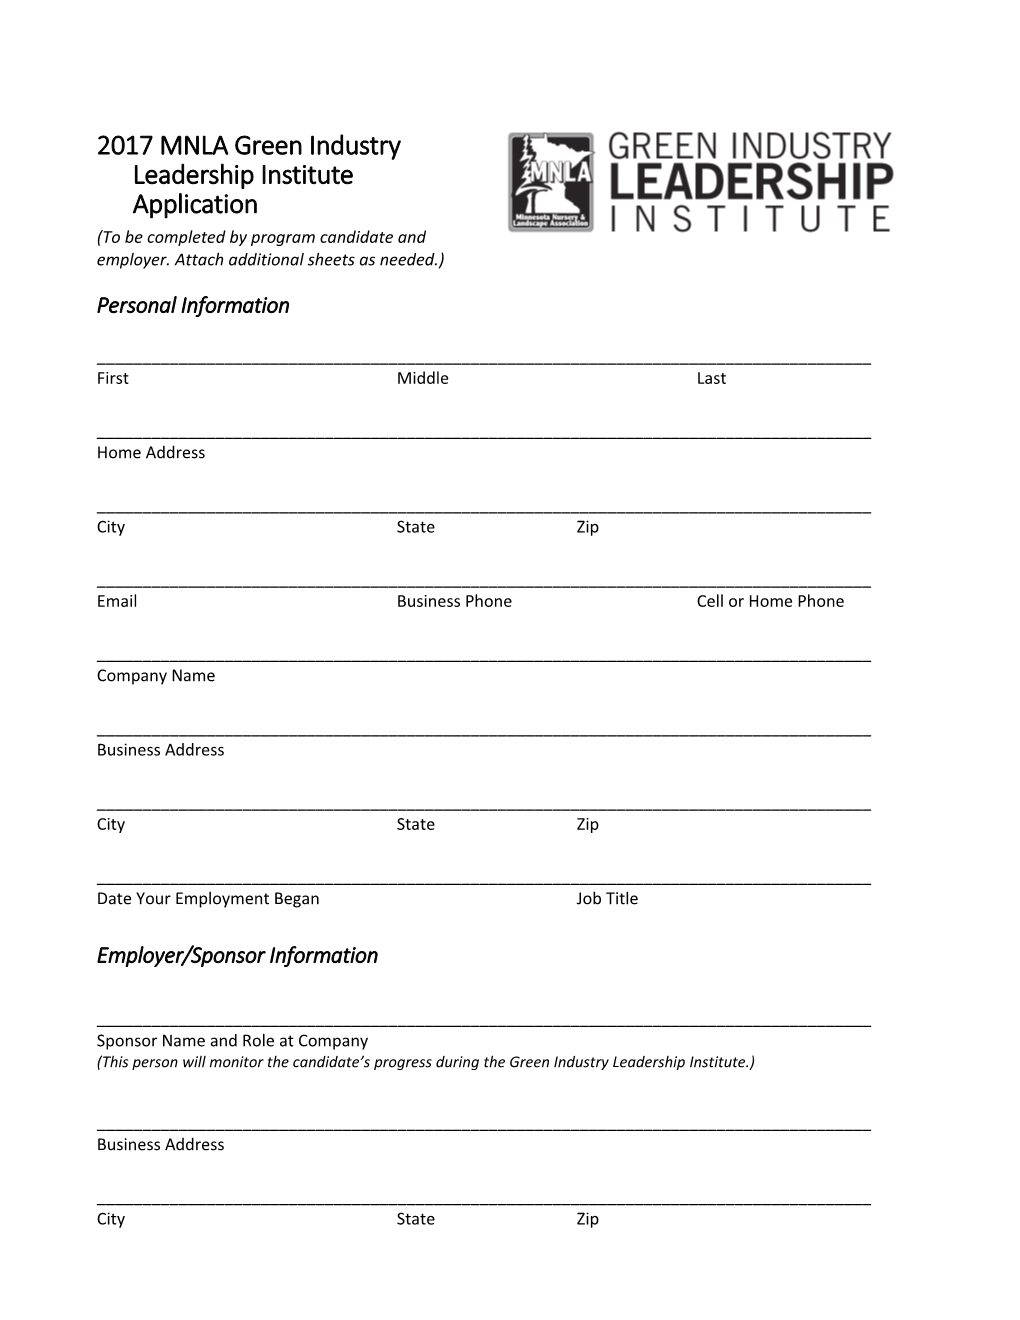 2017MNLA Green Industry Leadership Institute Application